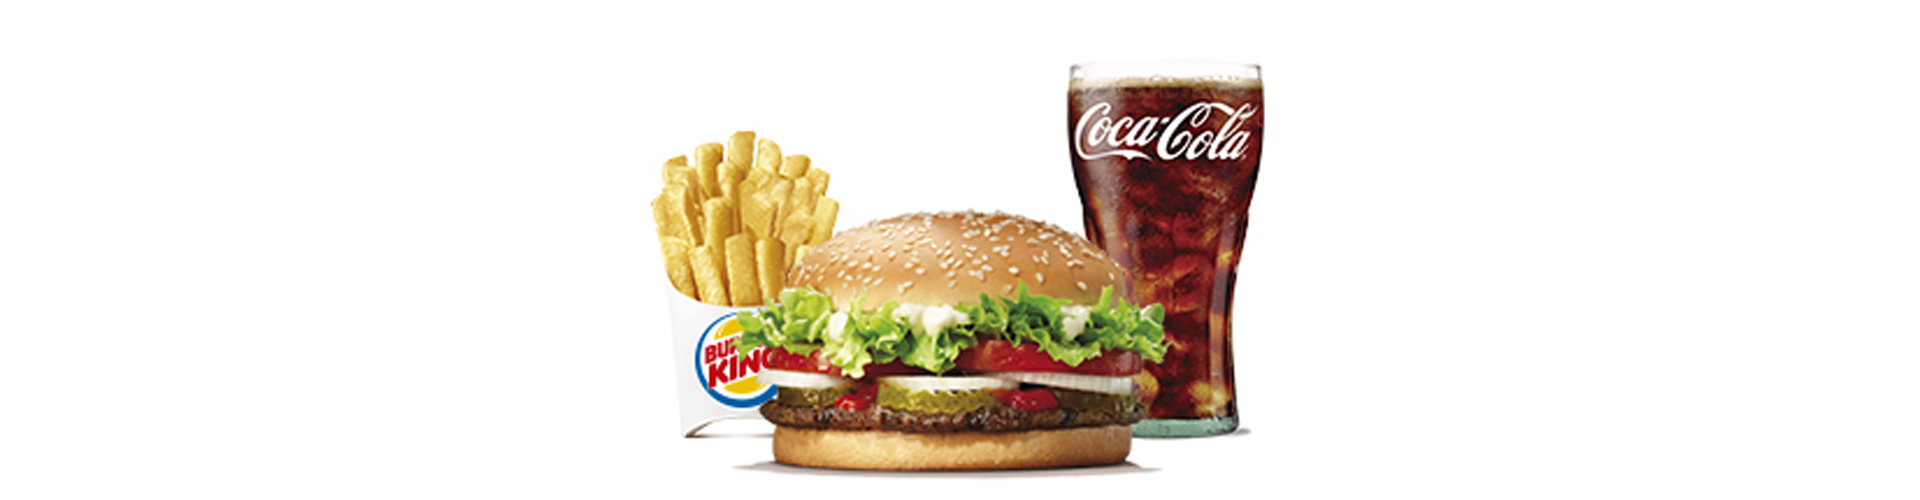 burgerking-40001707-limonada-aros